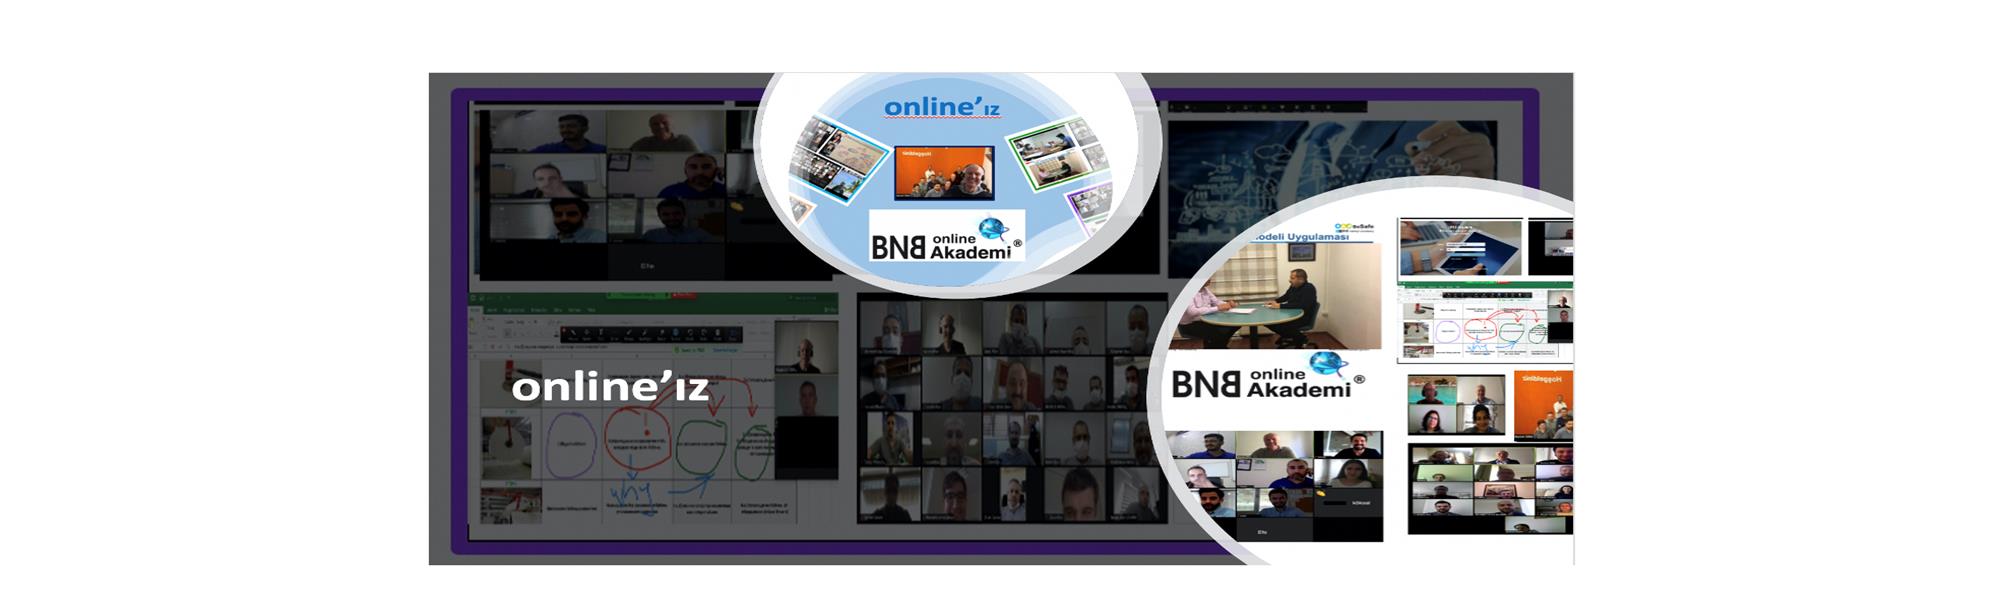 BNB Online Akademi